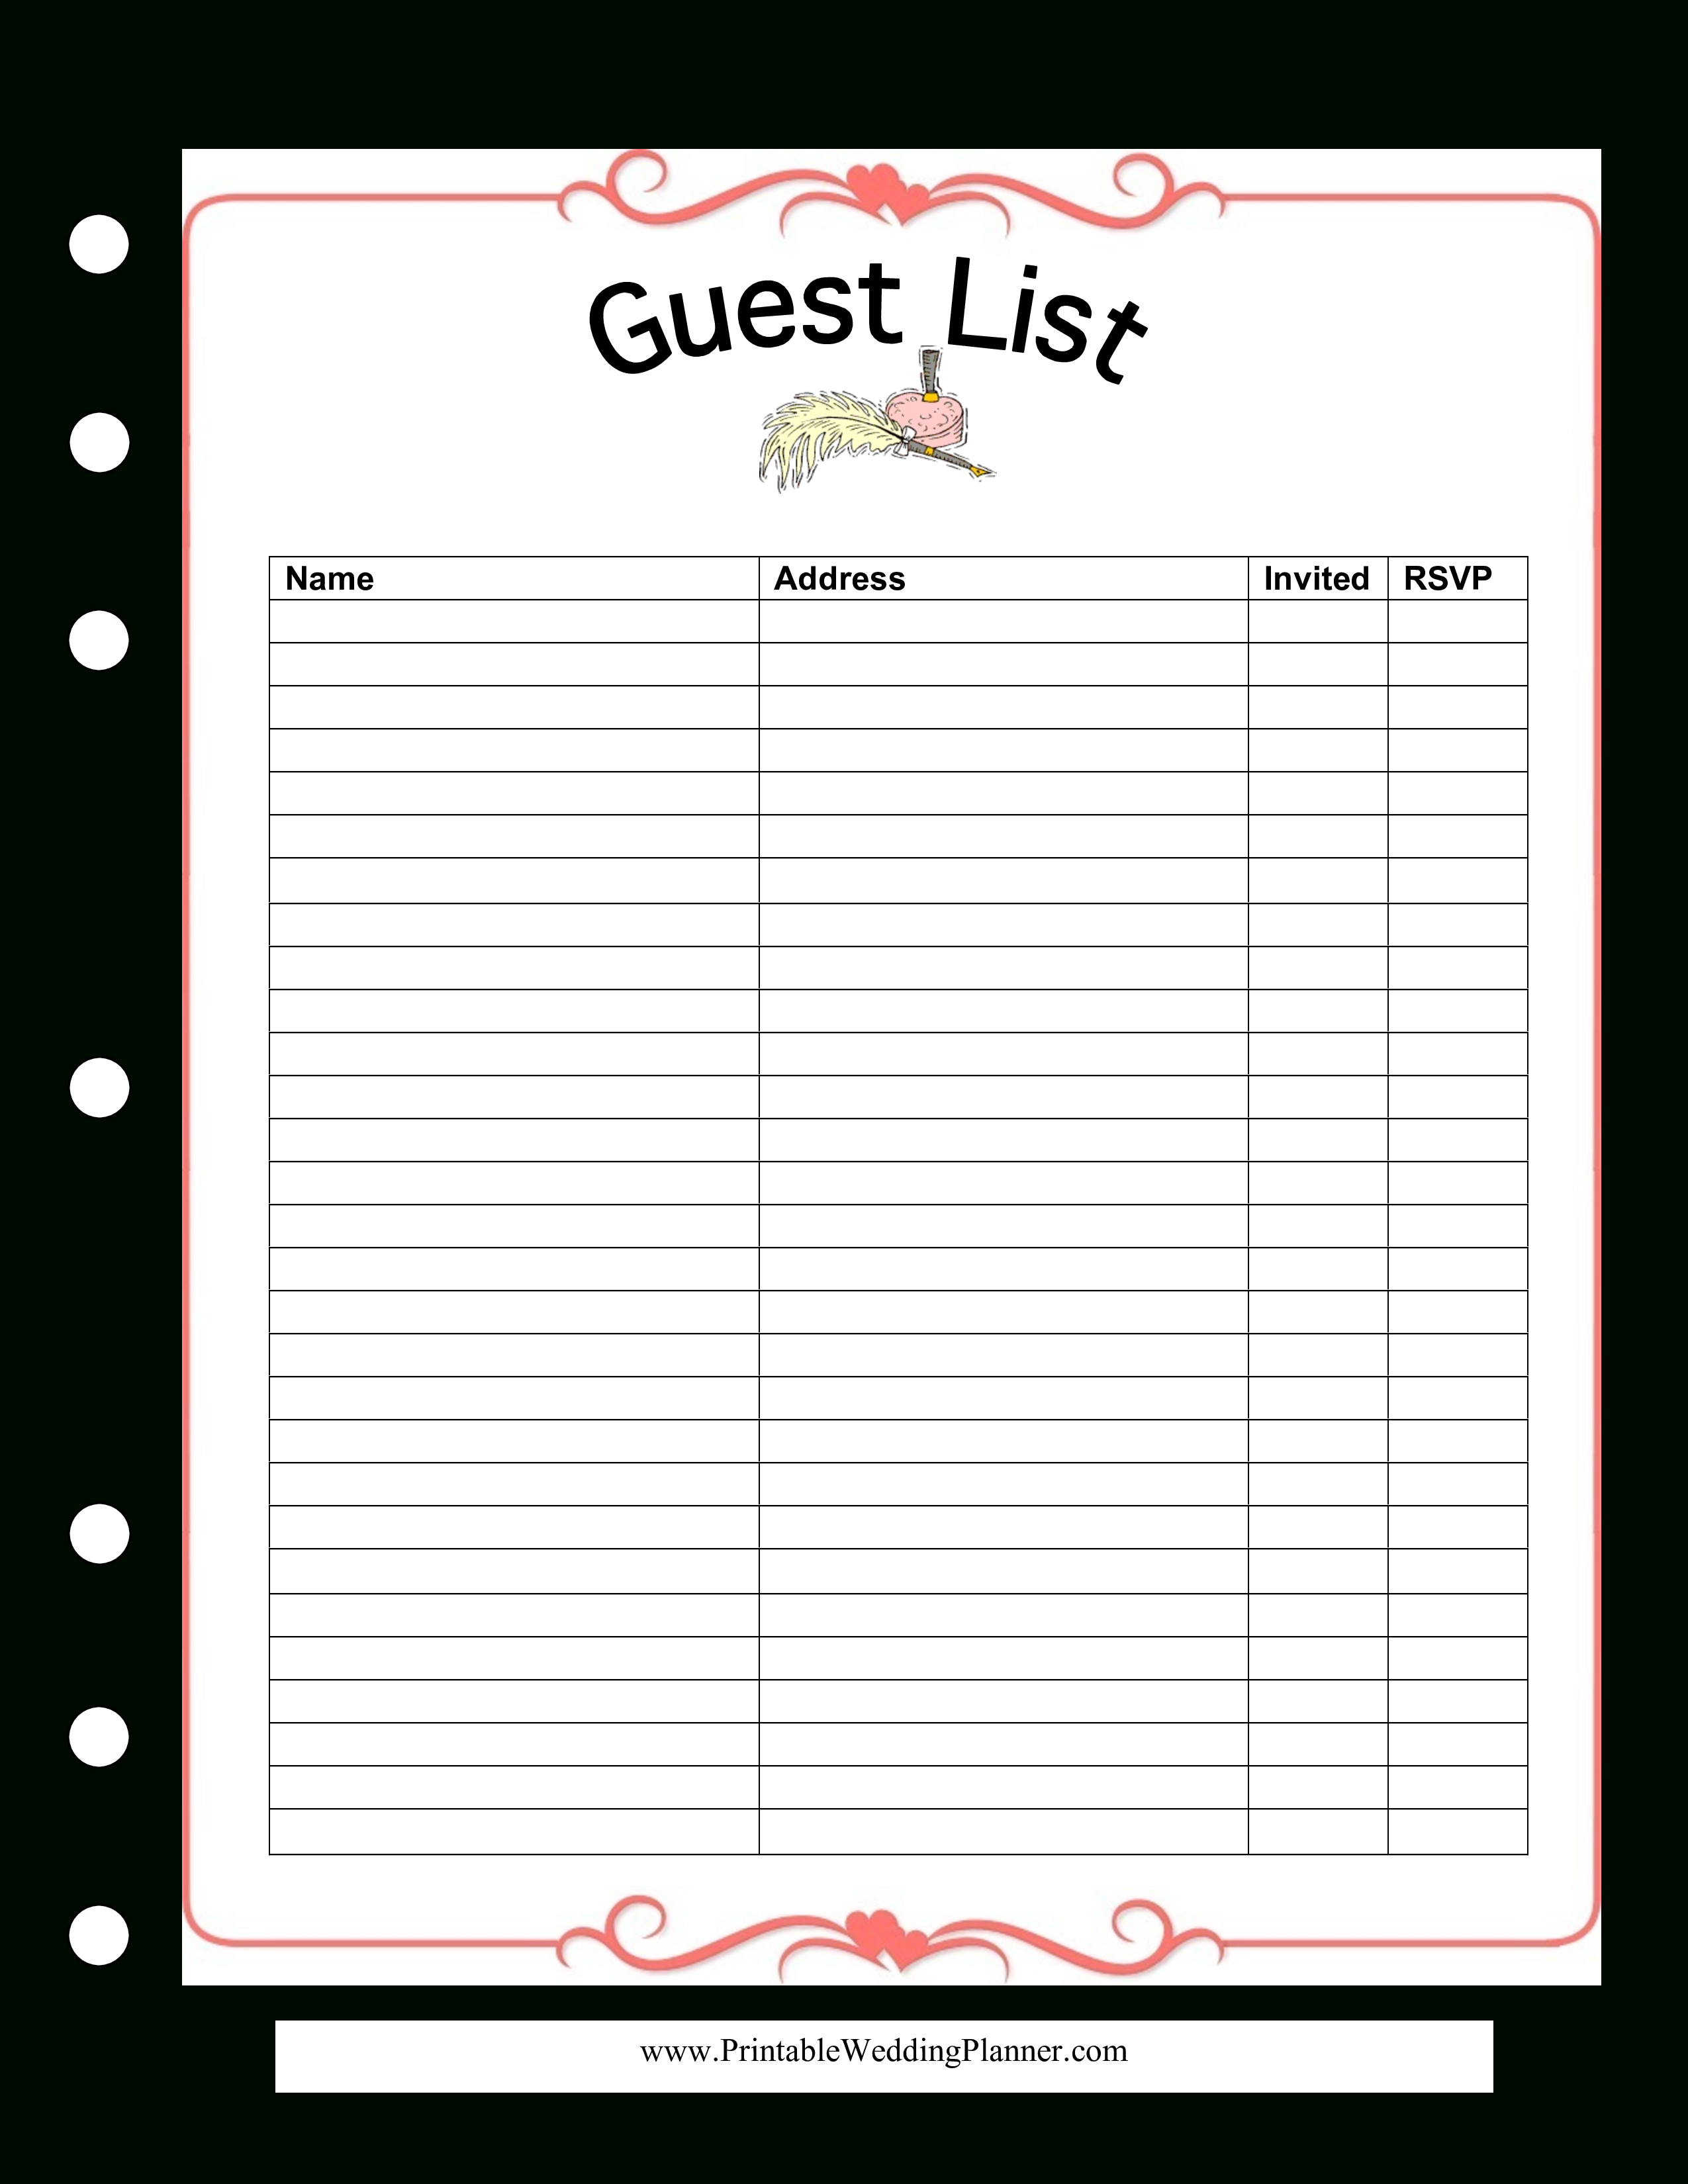 Wedding Guest List Spreadsheet Pertaining To Free Wedding Guest List Spreadsheet  Templates At